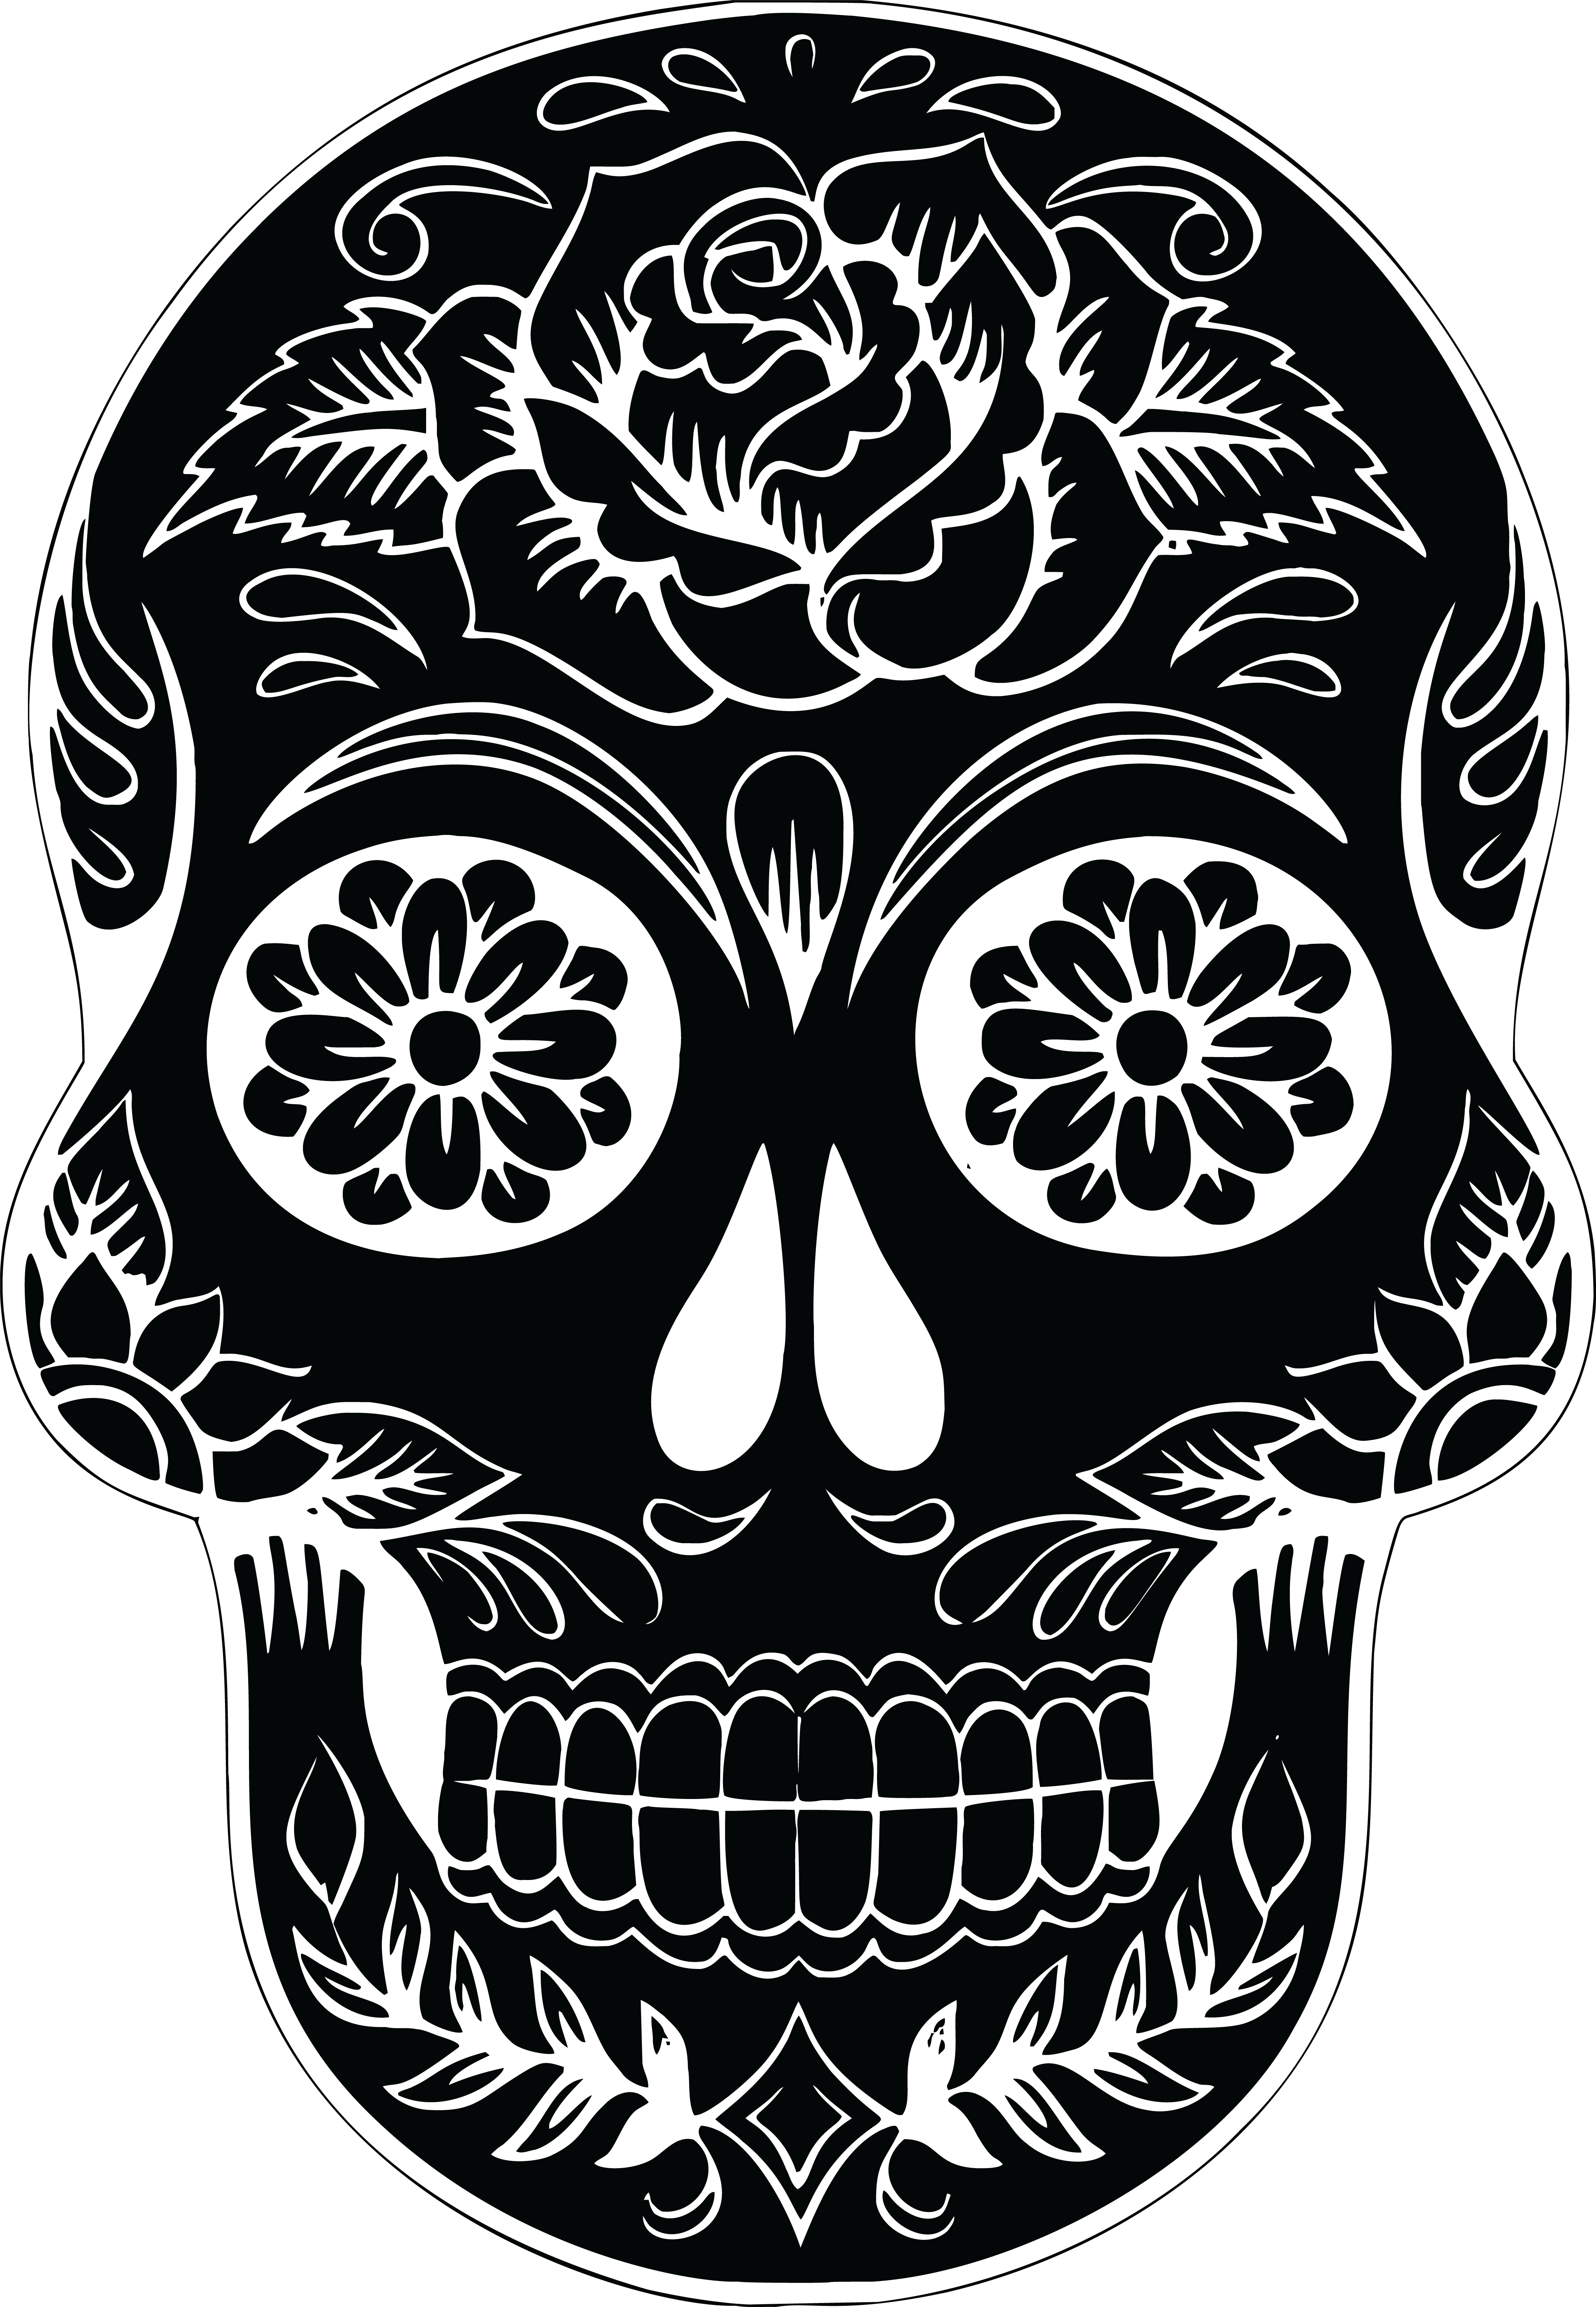 Calavera skull silhouette.